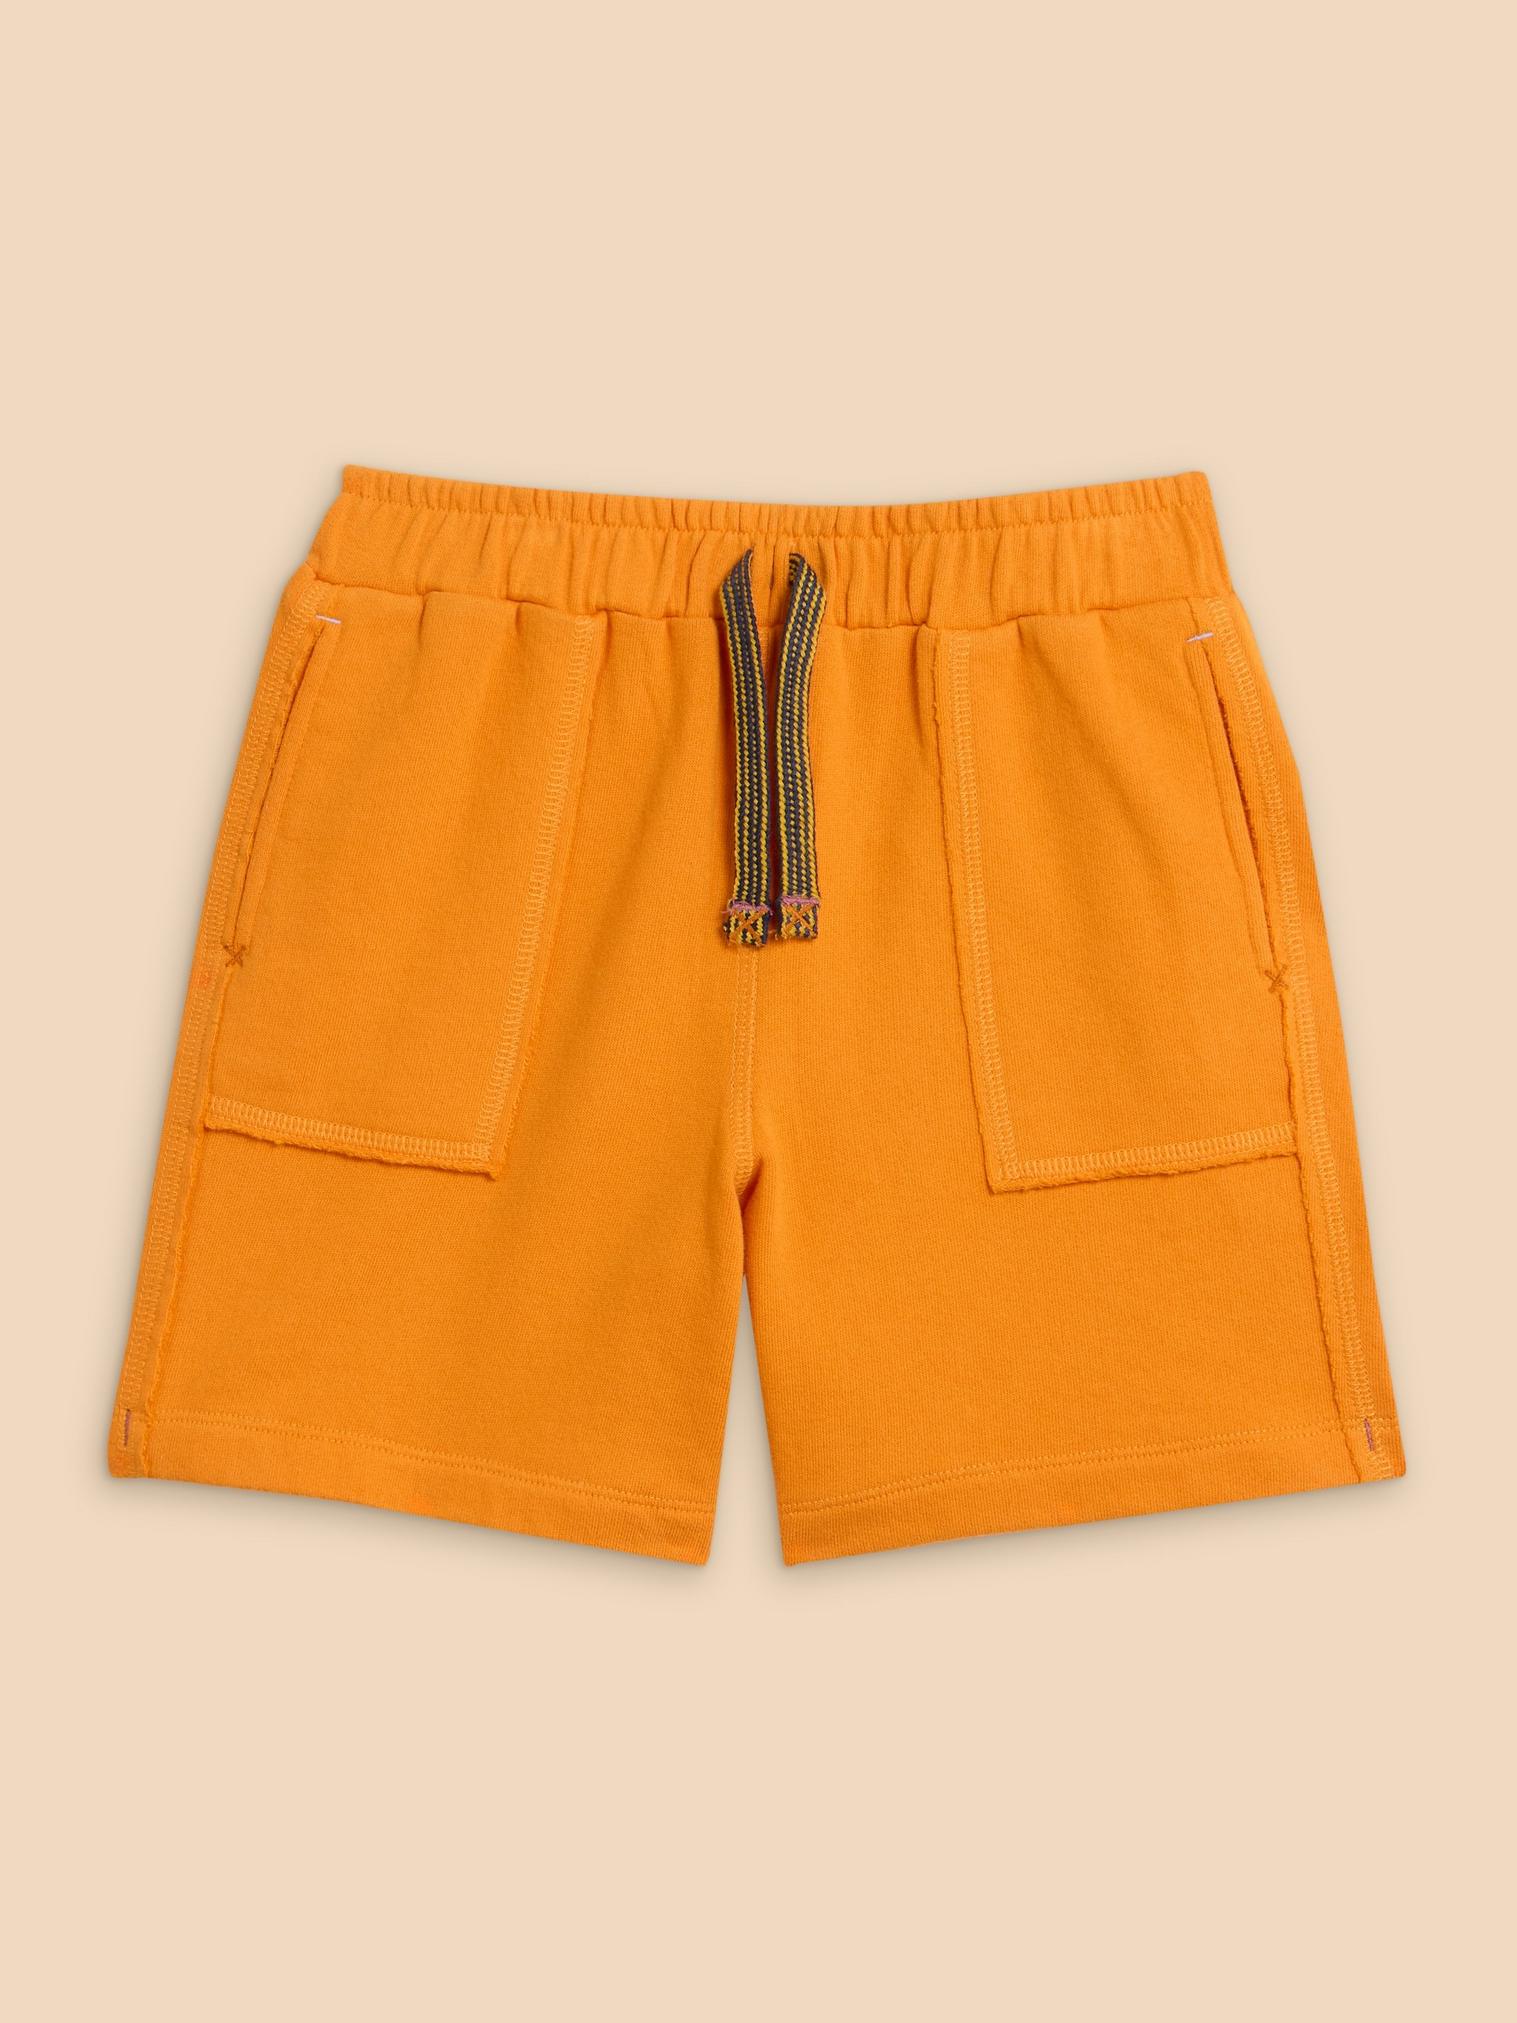 Jersey Pocket Short in MID ORANGE - FLAT FRONT